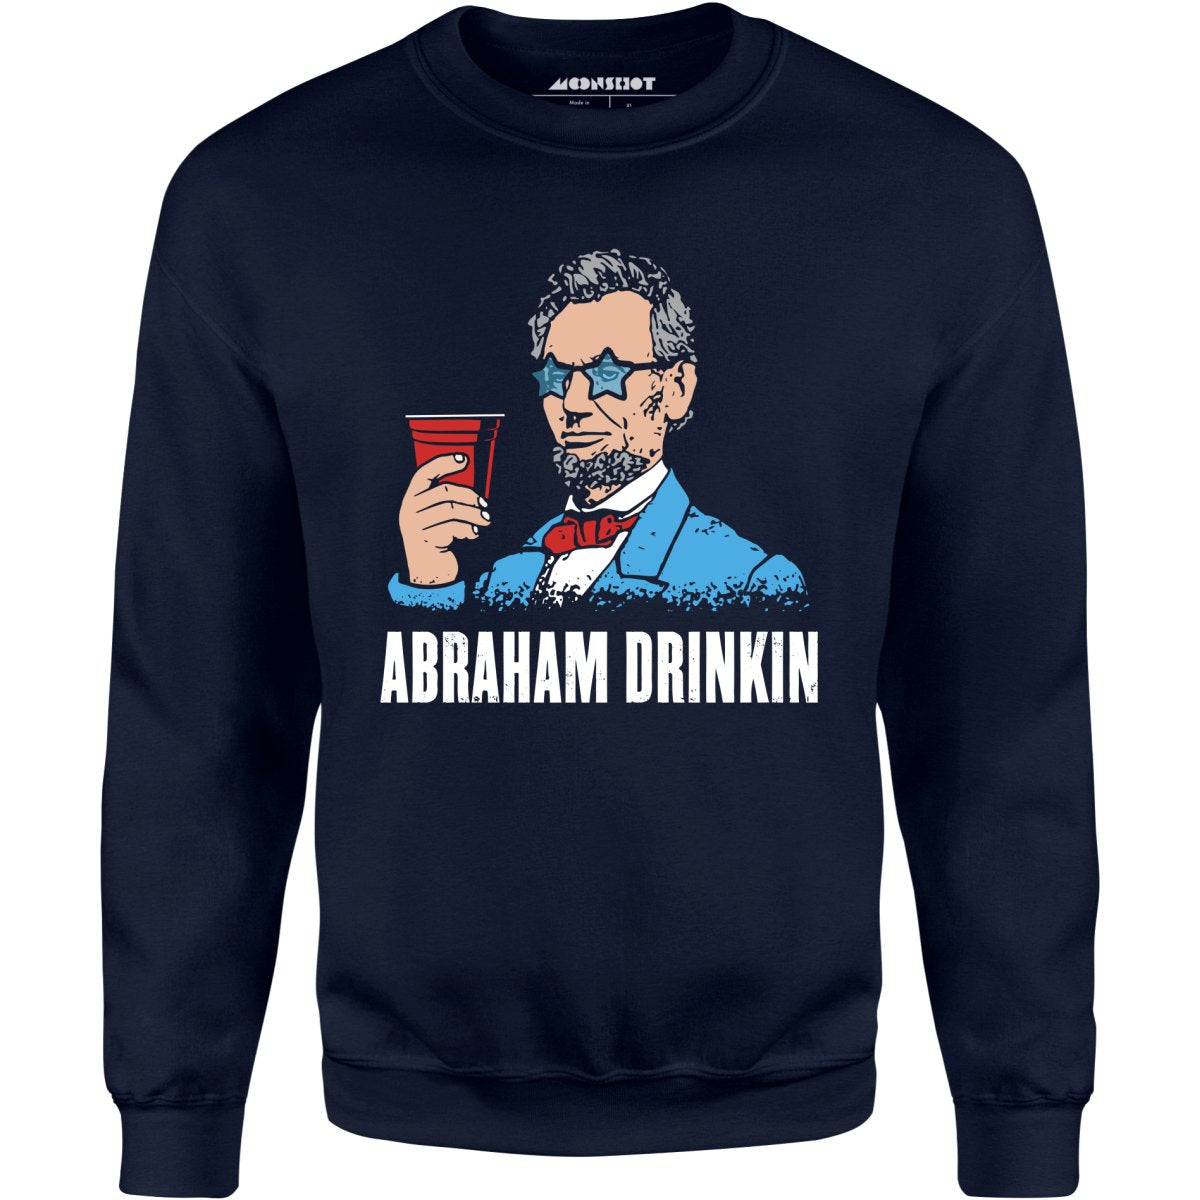 Abraham Drinkin - Unisex Sweatshirt